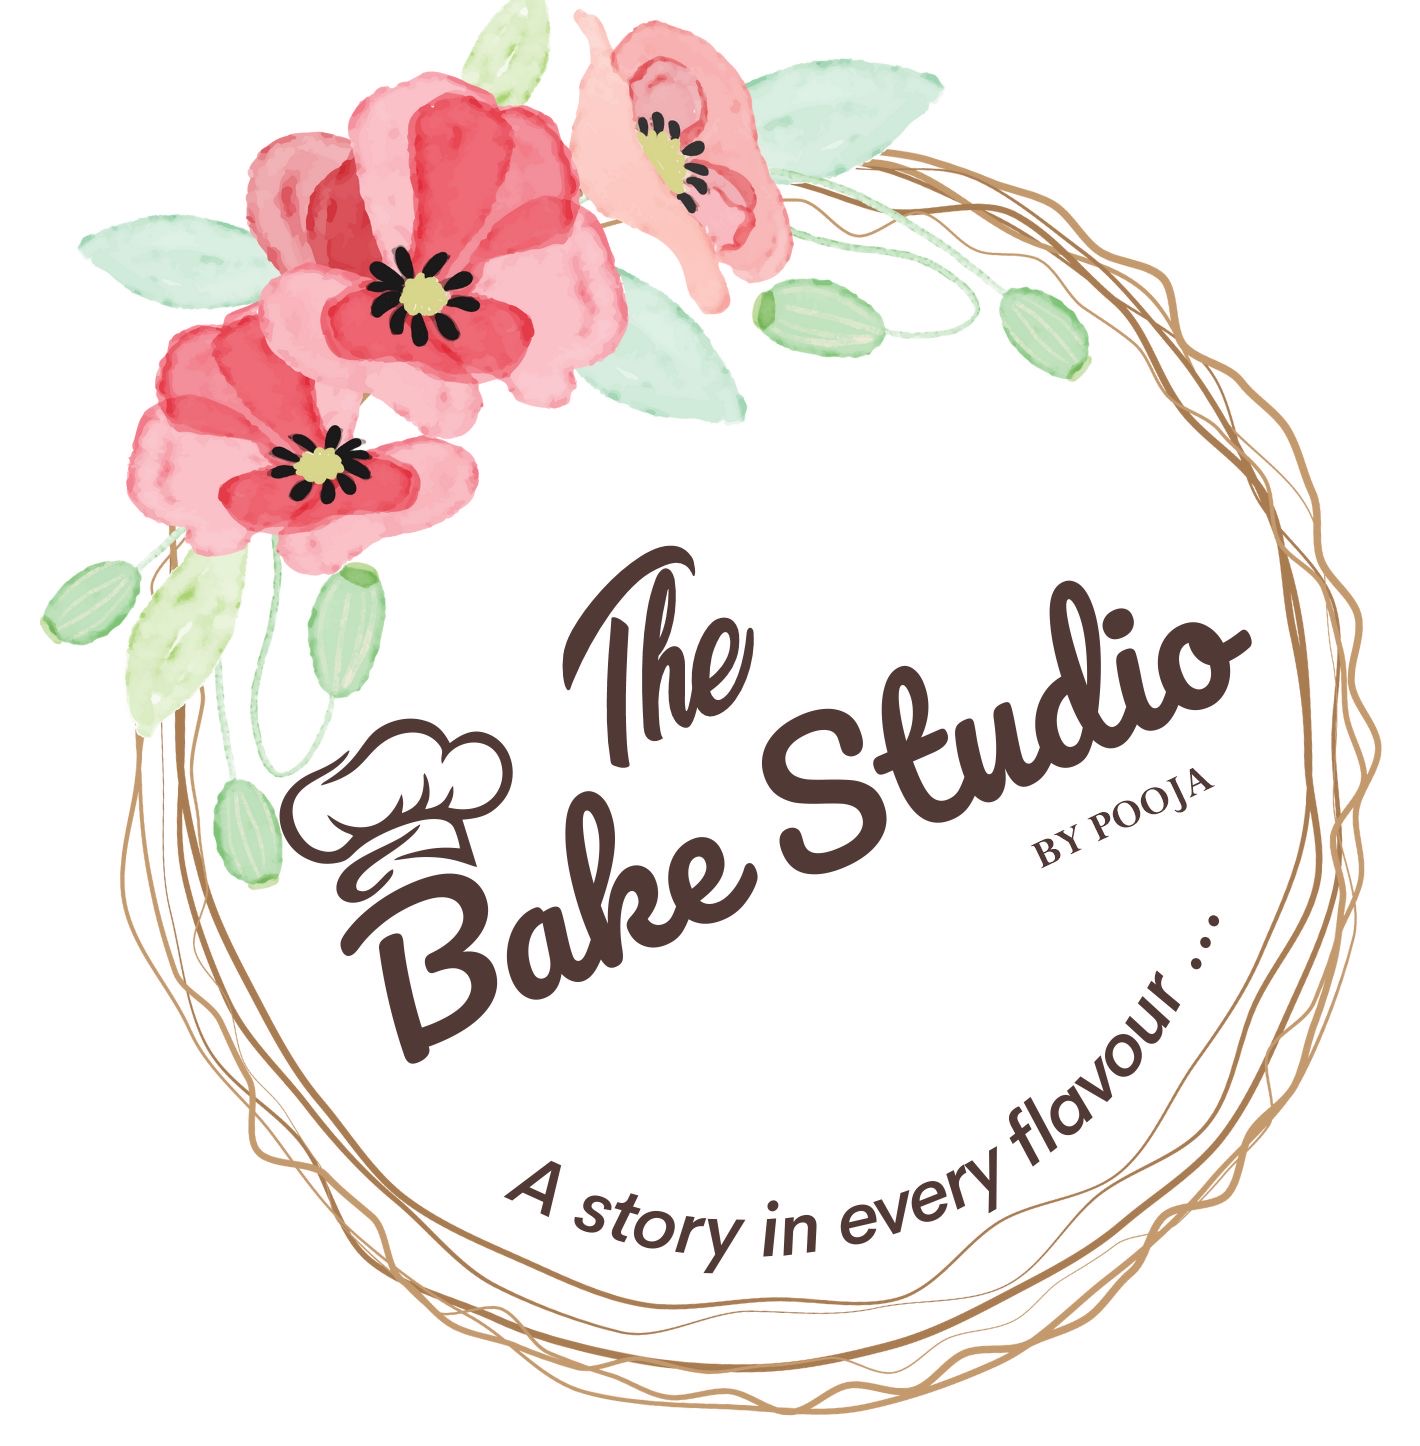 The Bake Studio By Pooja